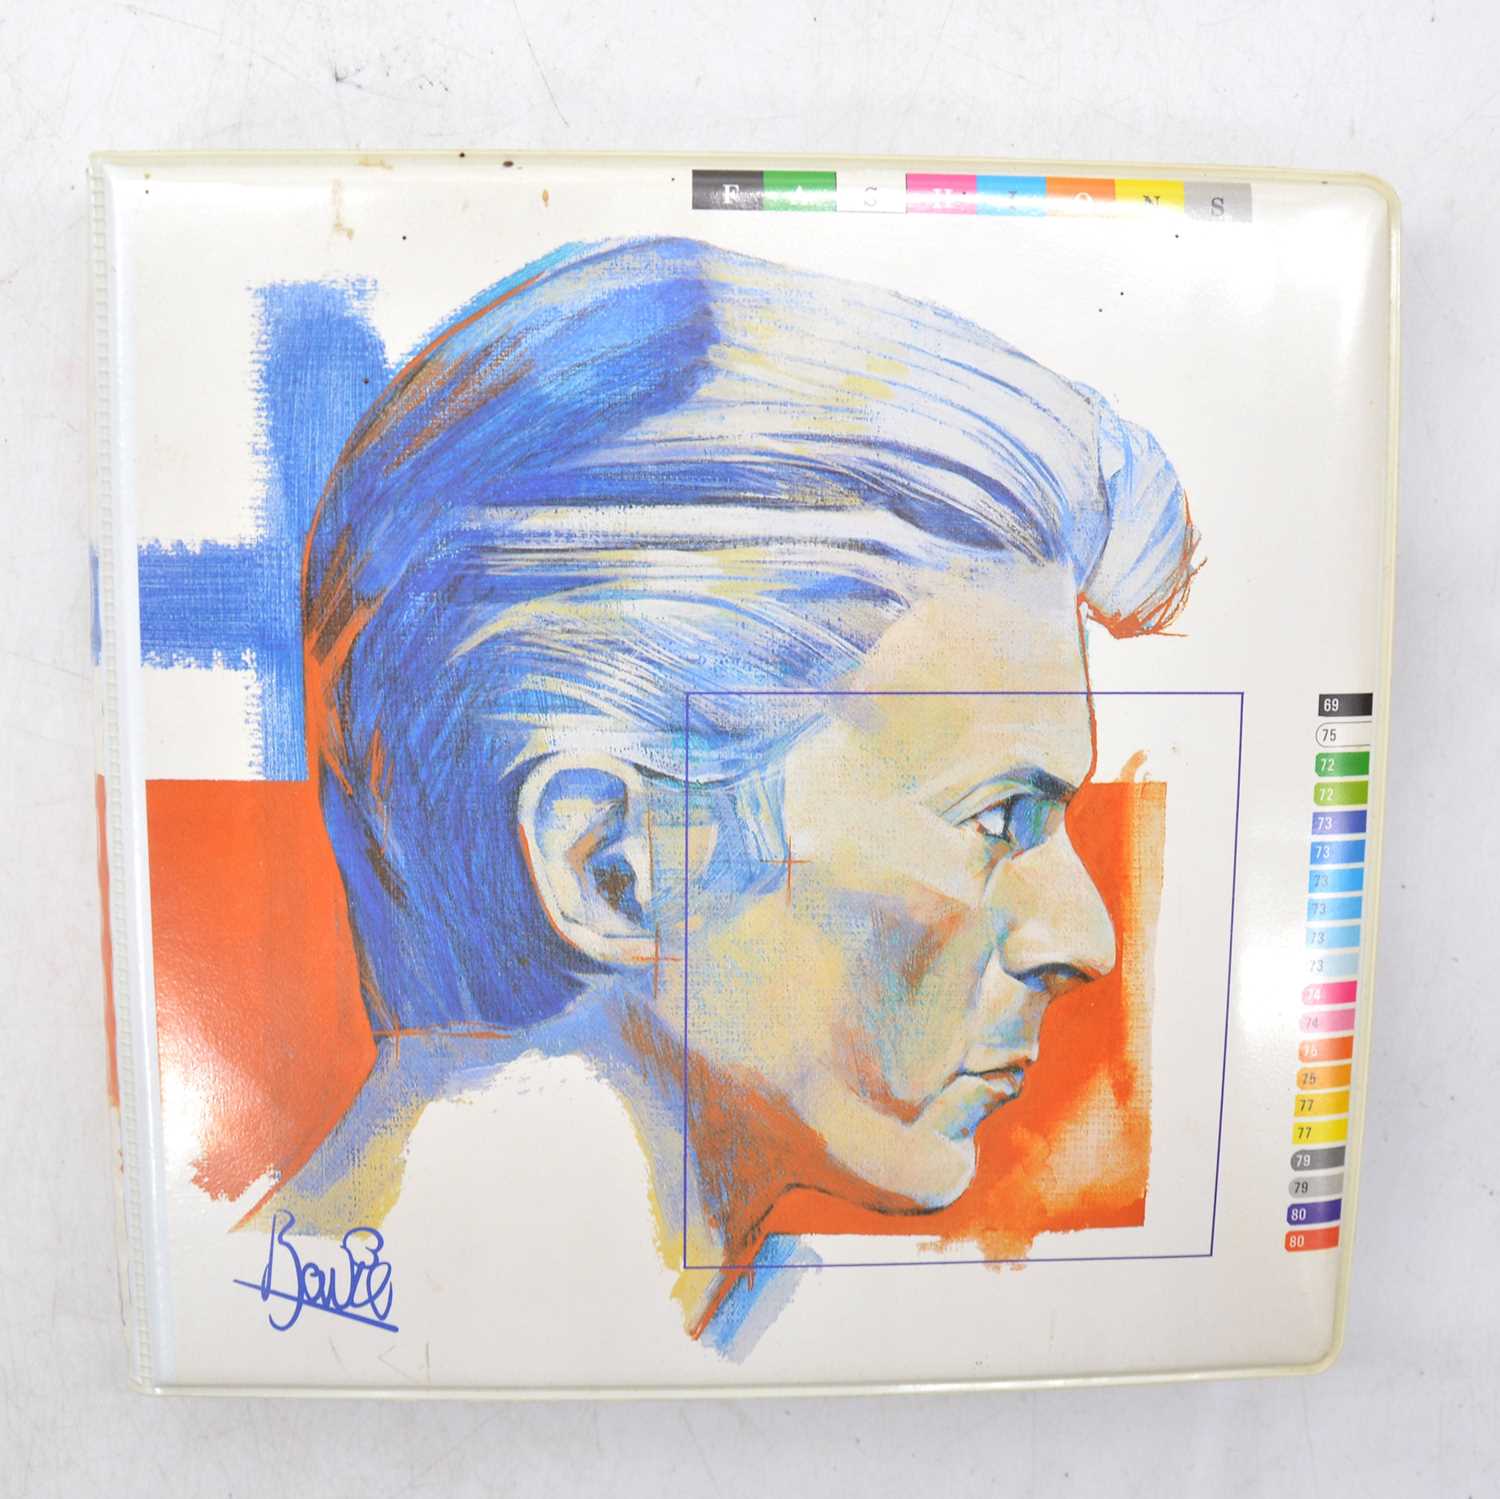 Lot 122 - David Bowie Fashions ten picture disc 7" vinyl set, with folder.